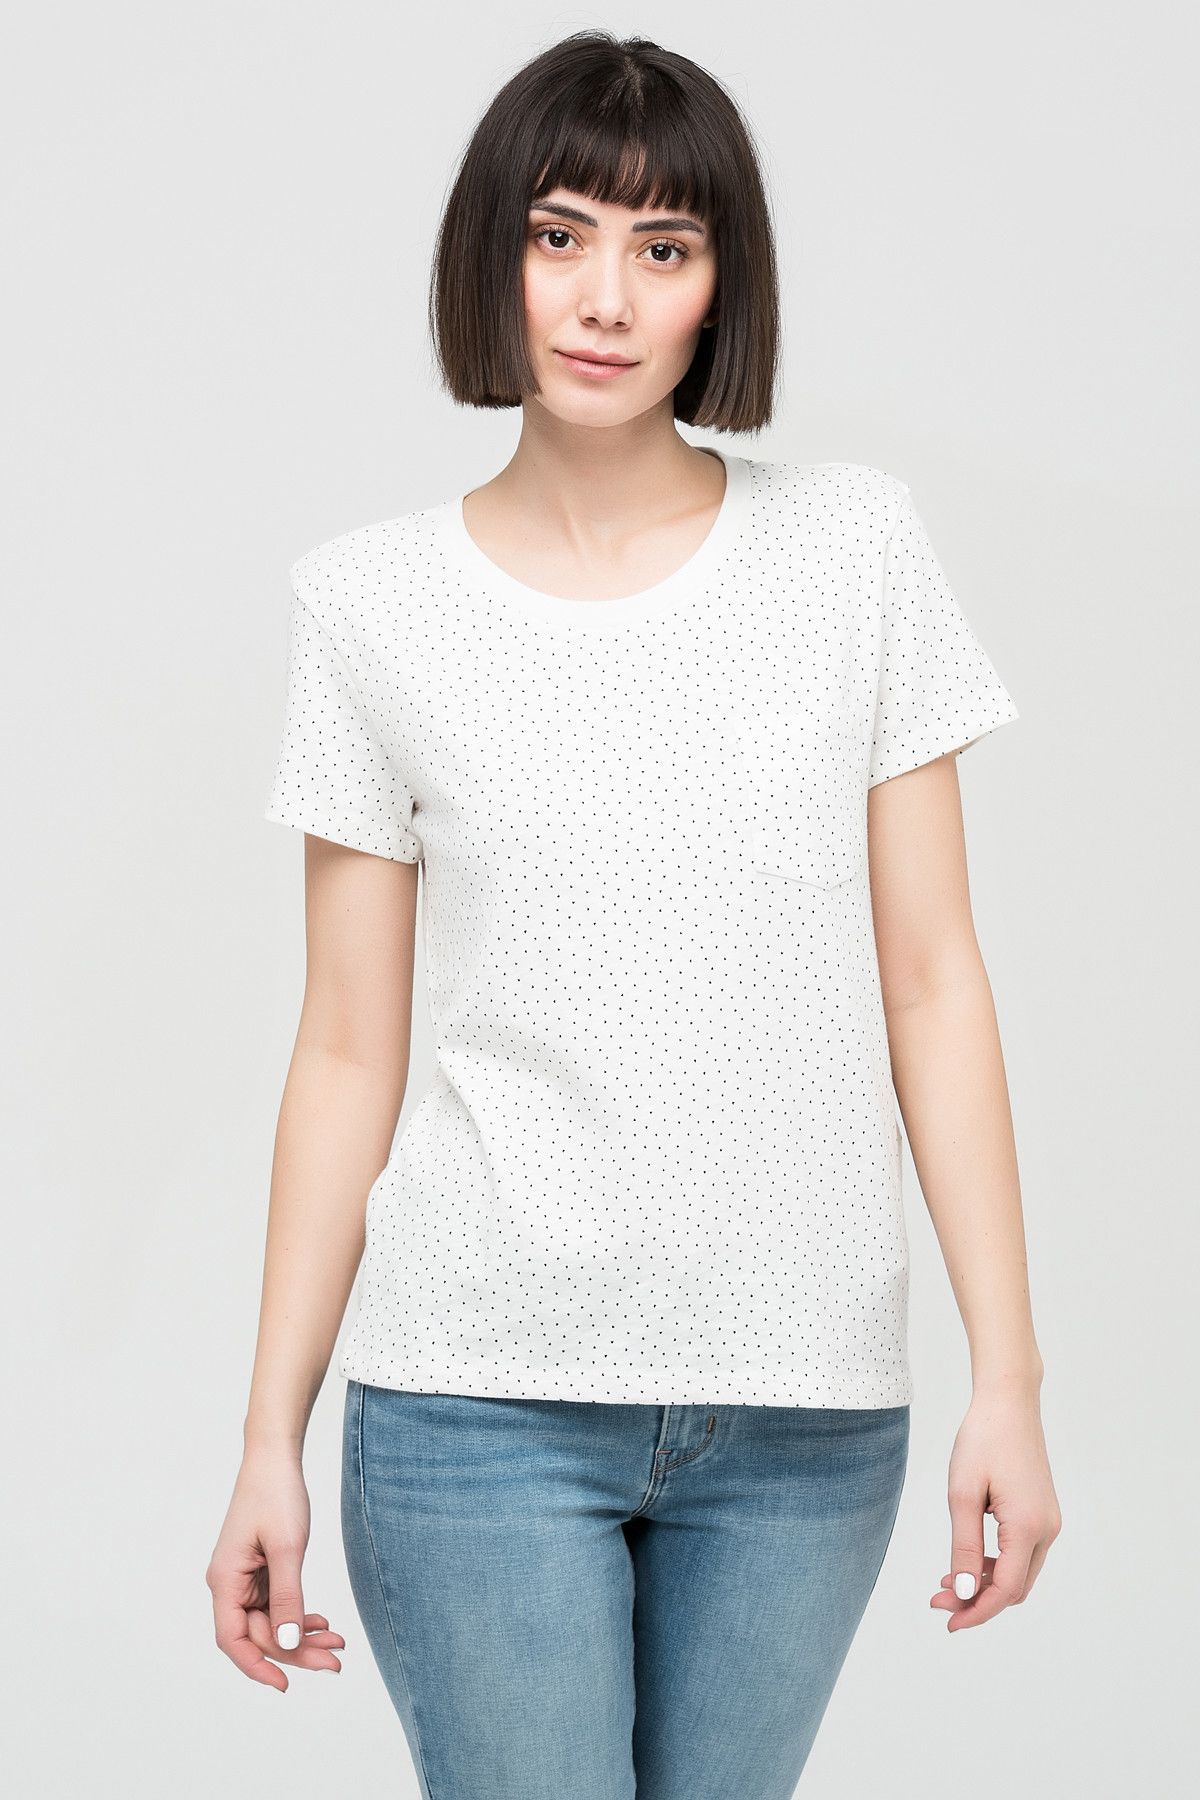 Levi's Kadın The Perfect Crew Corydalis Marshmallow T-shirt 18672-0070